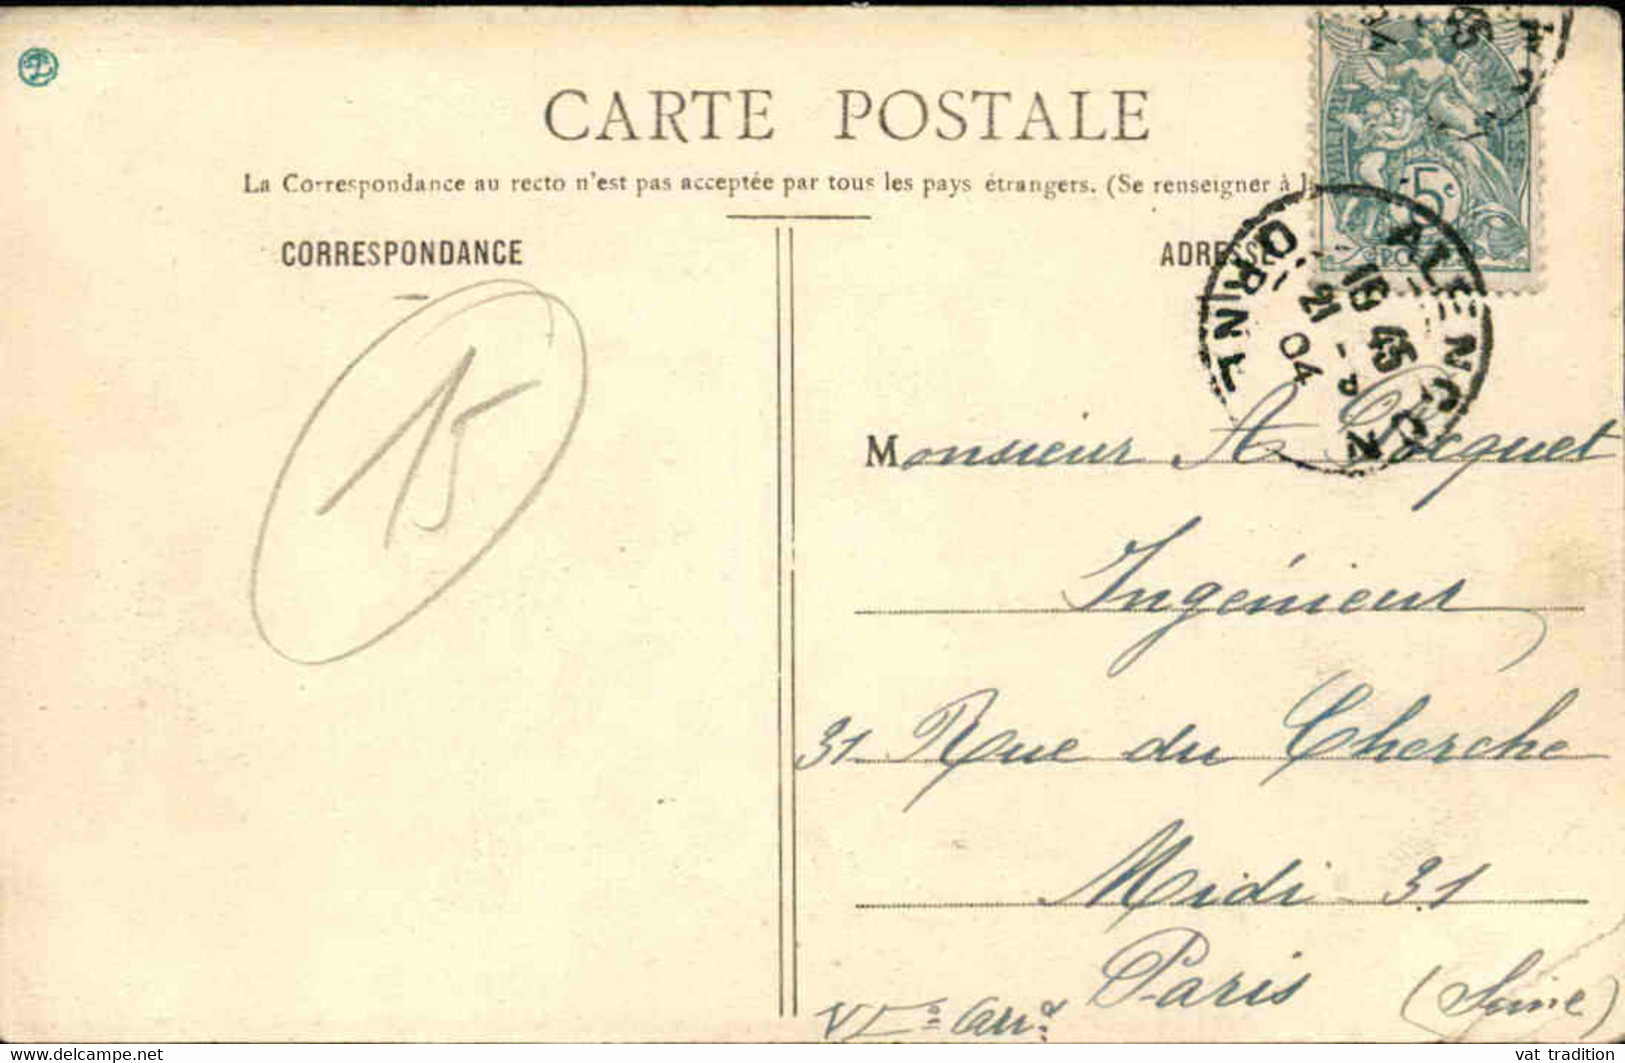 CATASTROPHES - Carte Postale De La Catastrophe De Mamers En 1904 - L 116833 - Catastrophes